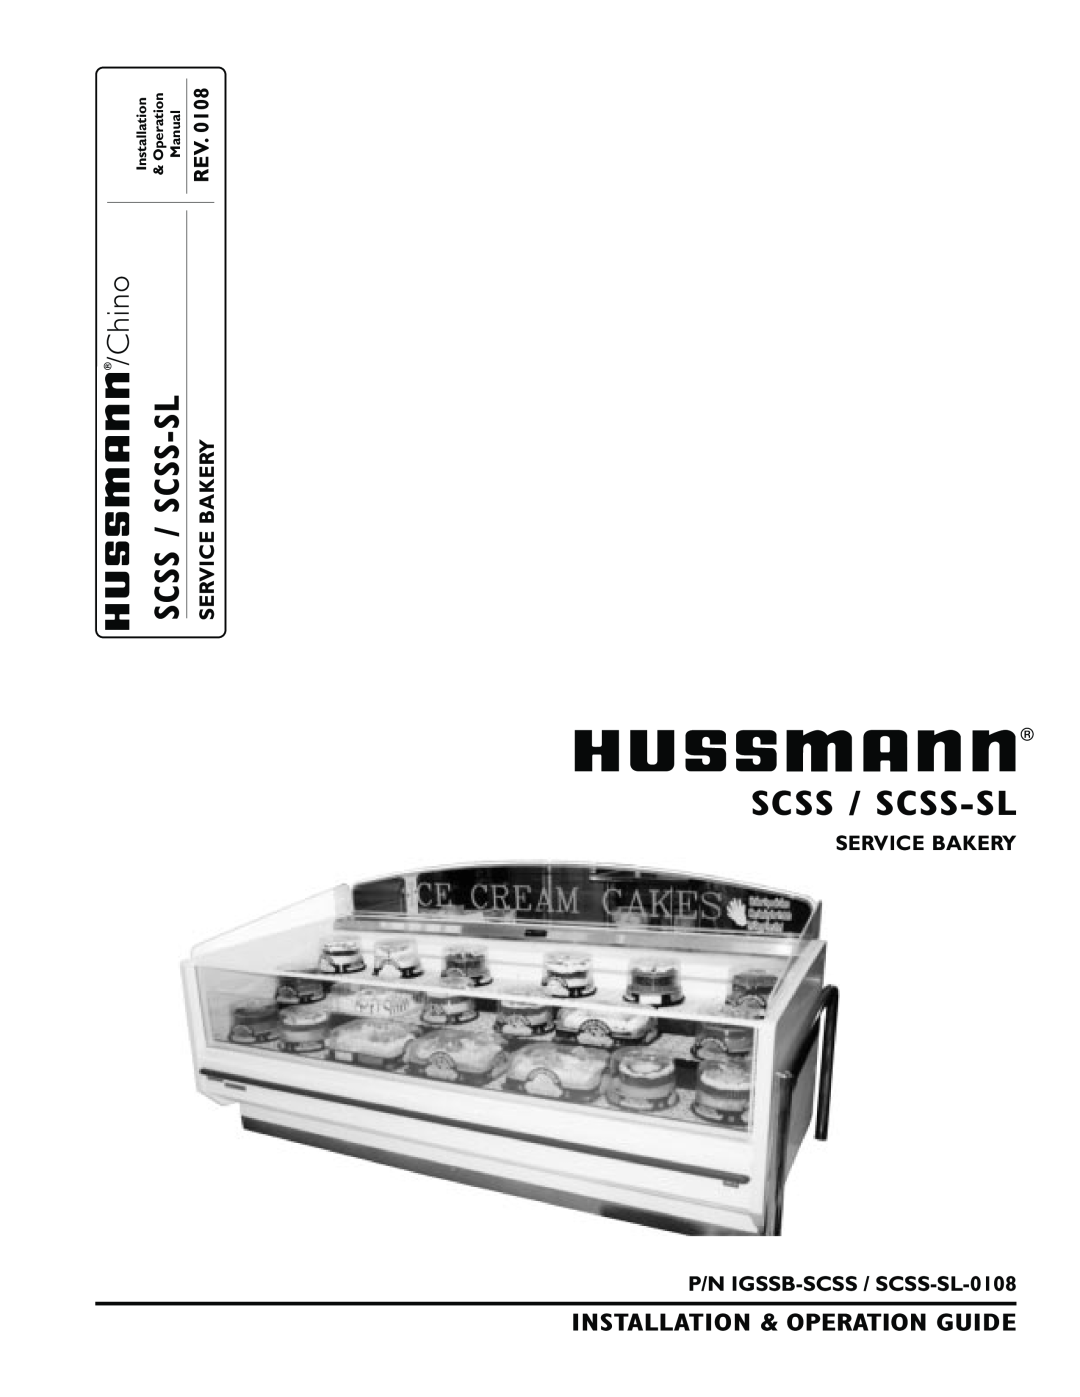 hussman manual Chino, SERVICE BAKERY P/N IGSSB-SCSS / SCSS-SL-0108, Service Bakery, Scss / Scss-Sl, Installation 